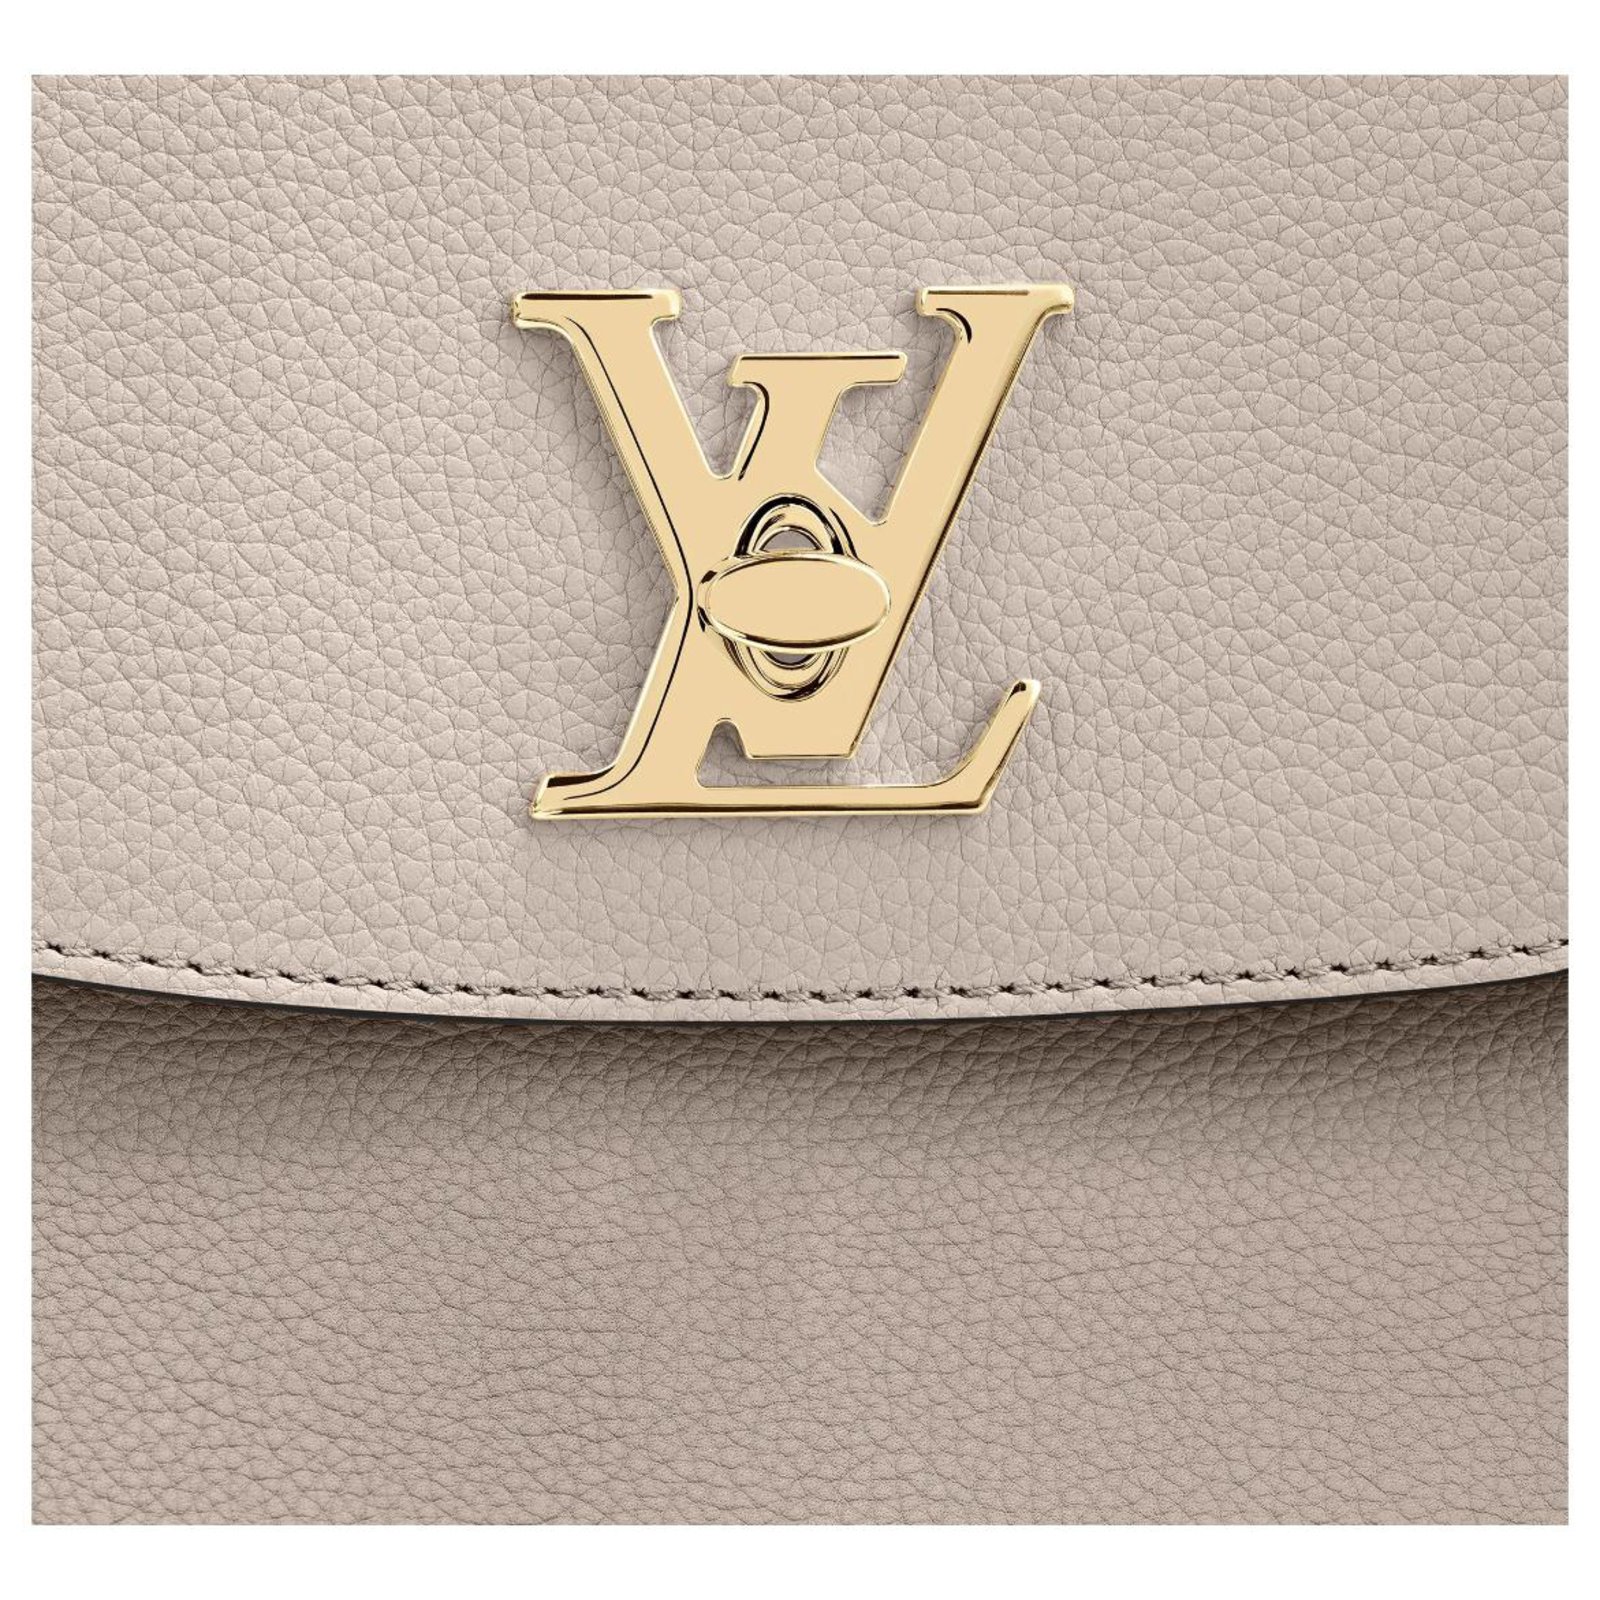 Louis Vuitton, Lockme Ever MM Greige Handbag